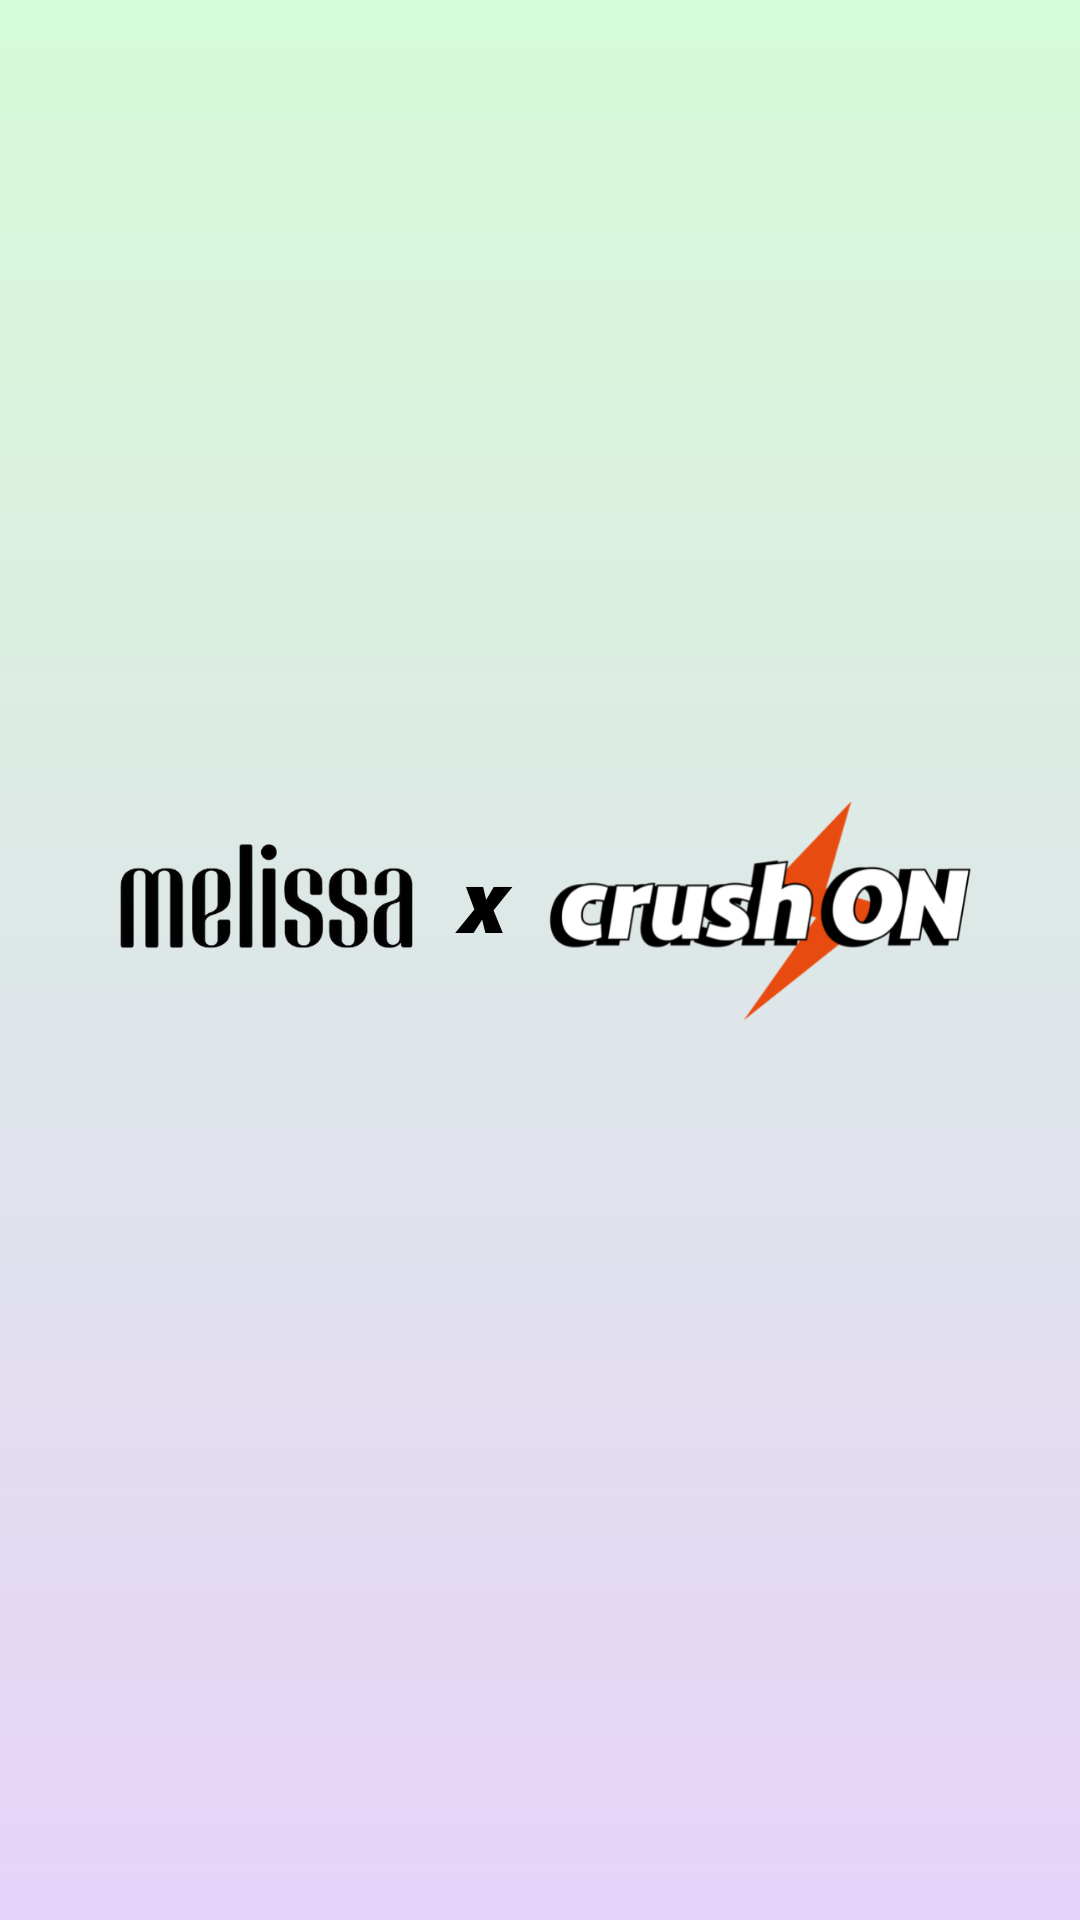 COLLAB CRUSHON X MELISSA SHOES